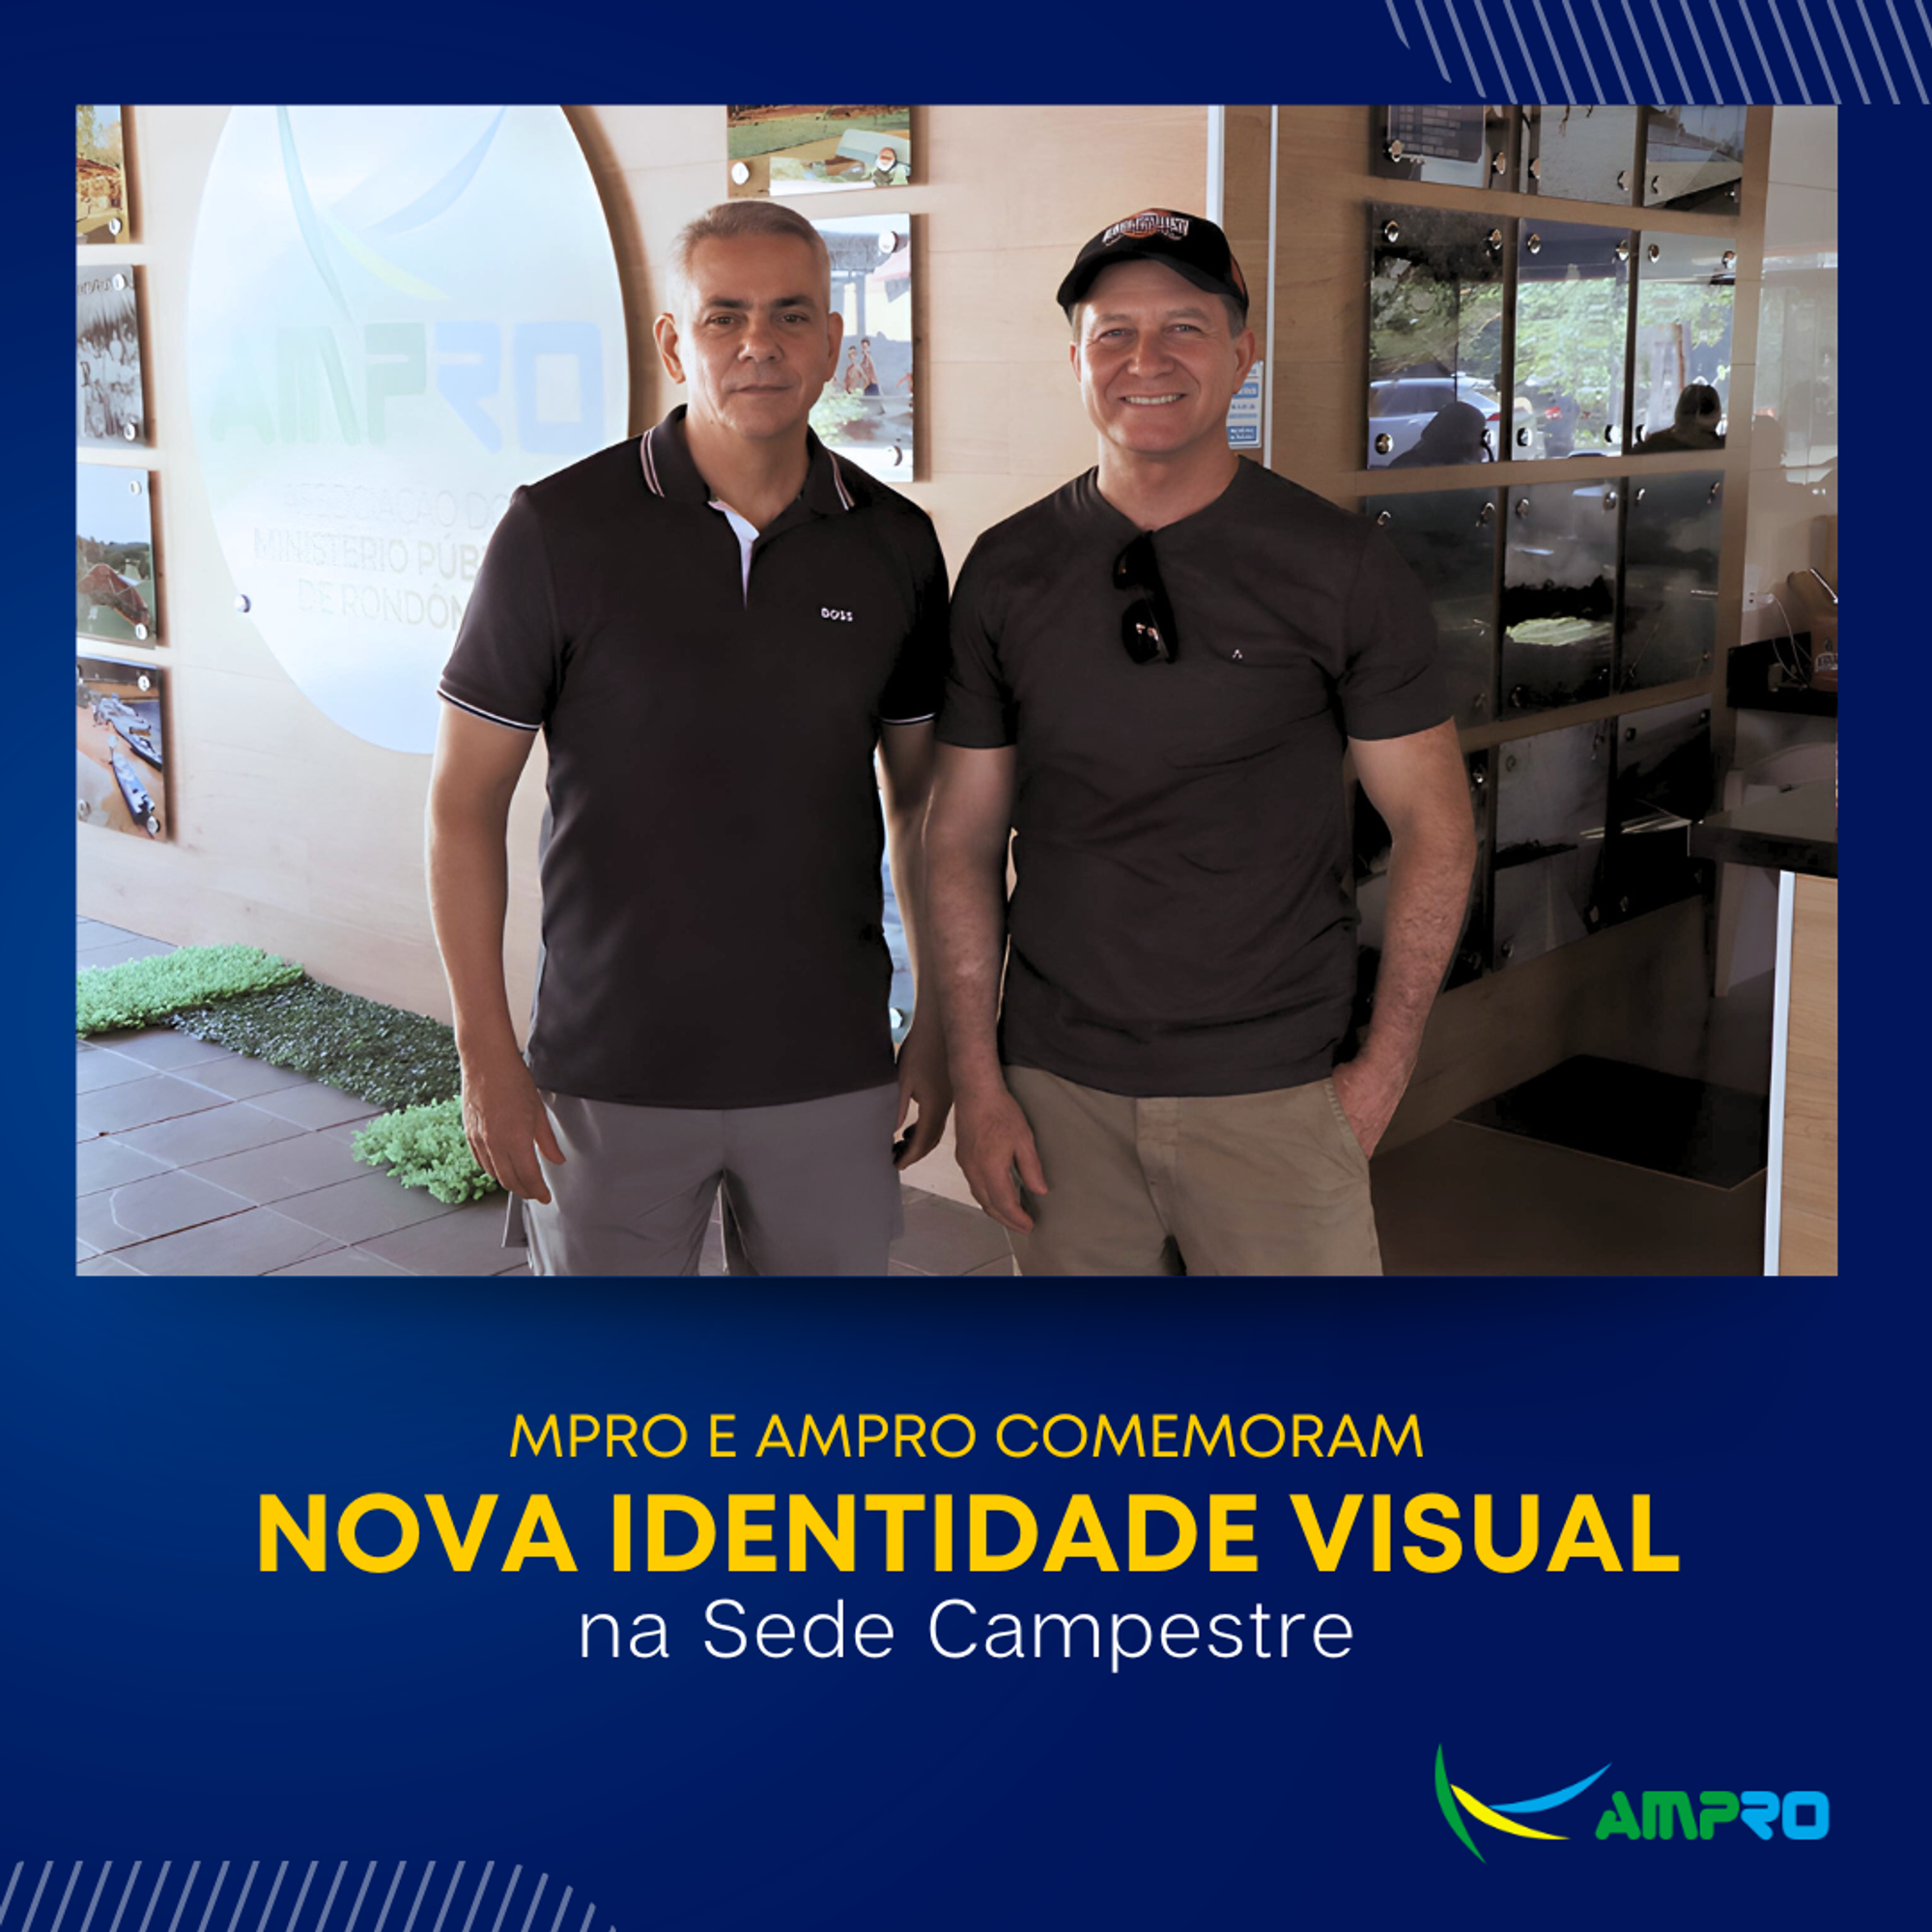 MPRO e AMPRO comemoram nova identidade visual na Sede Campestre